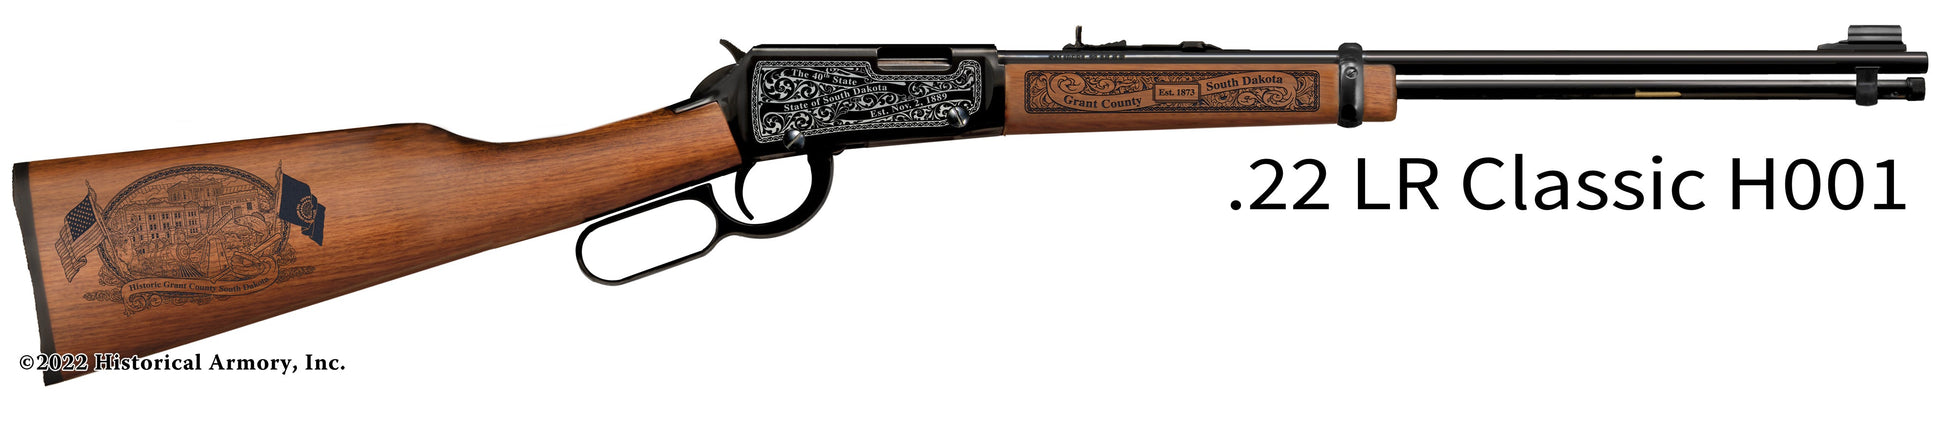 Grant County South Dakota Engraved Henry H001 Rifle